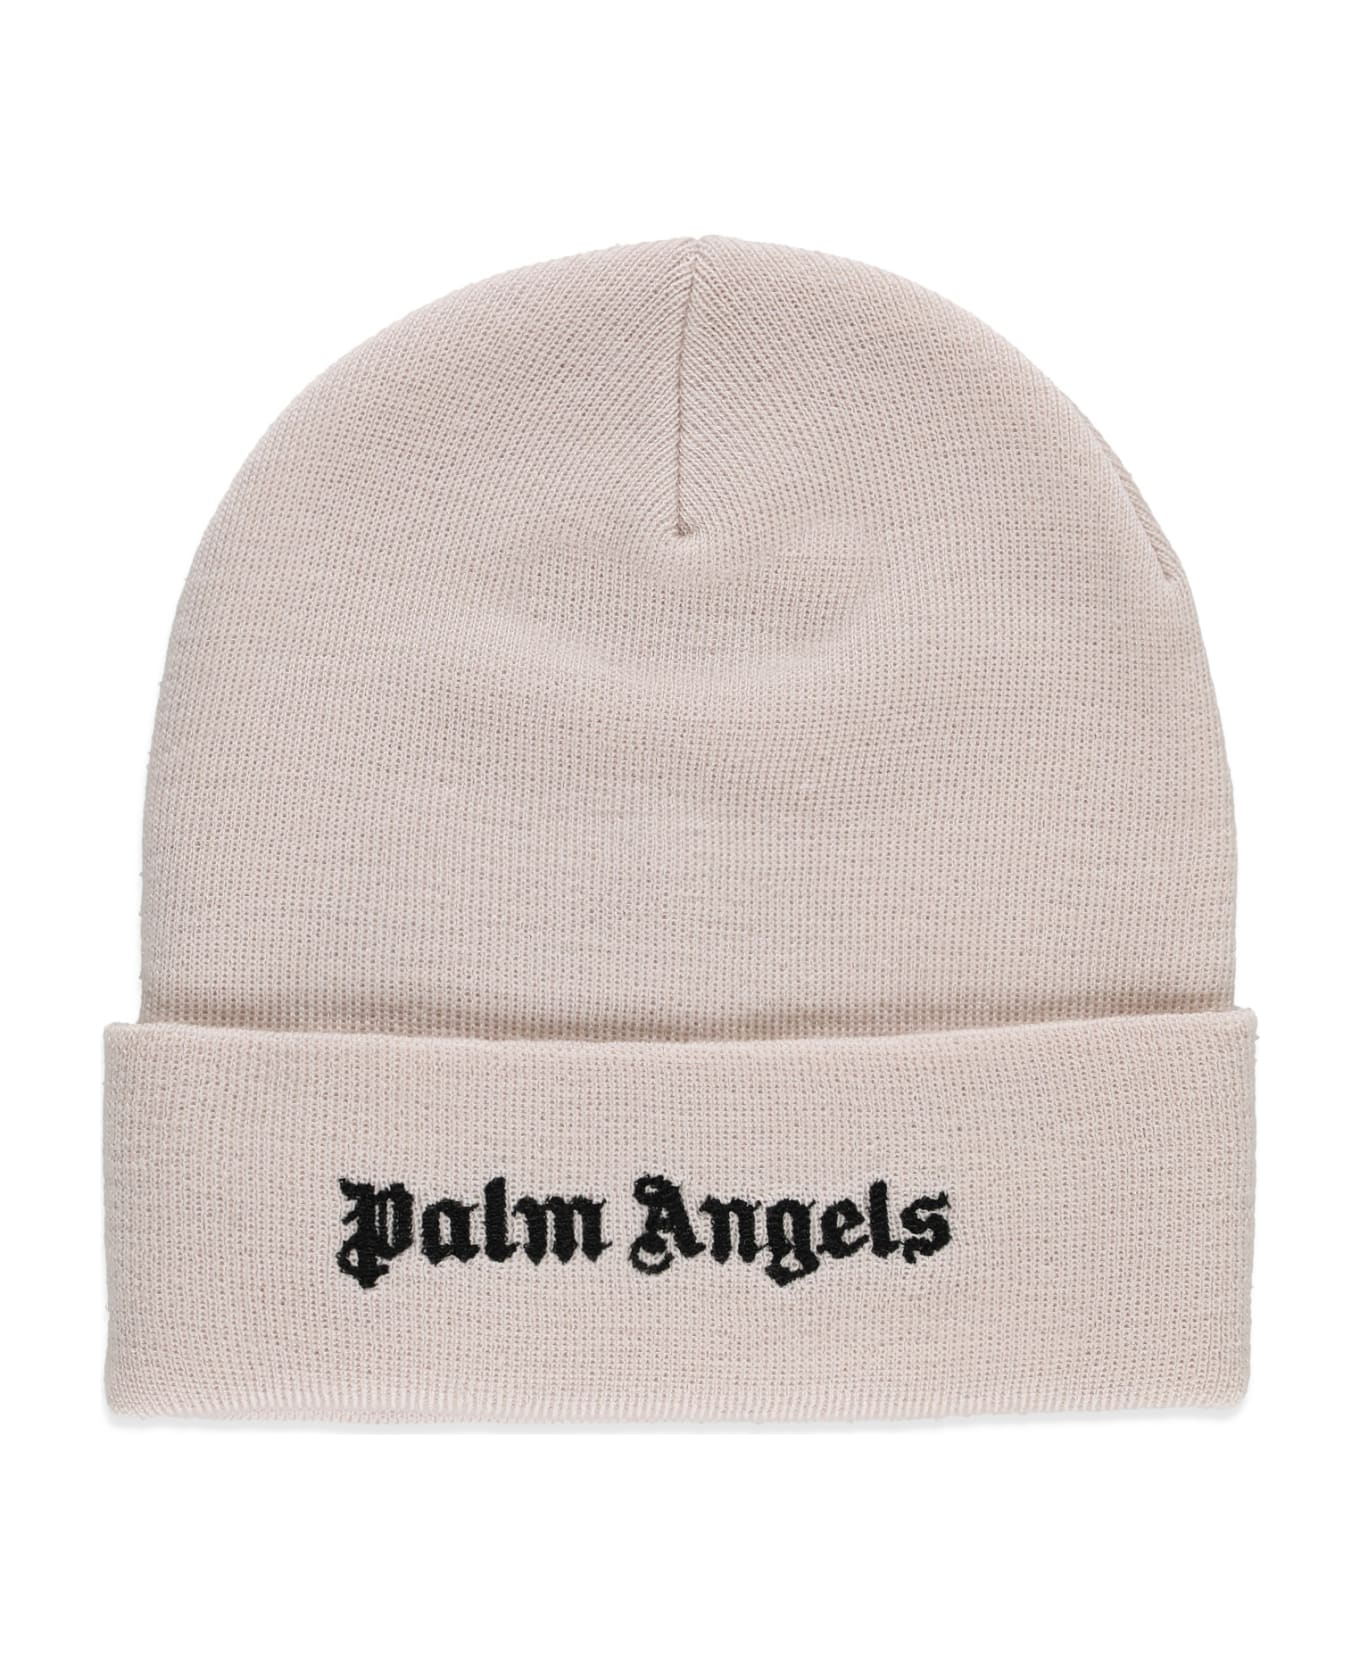 Palm Angels Wool Beanie - Pink